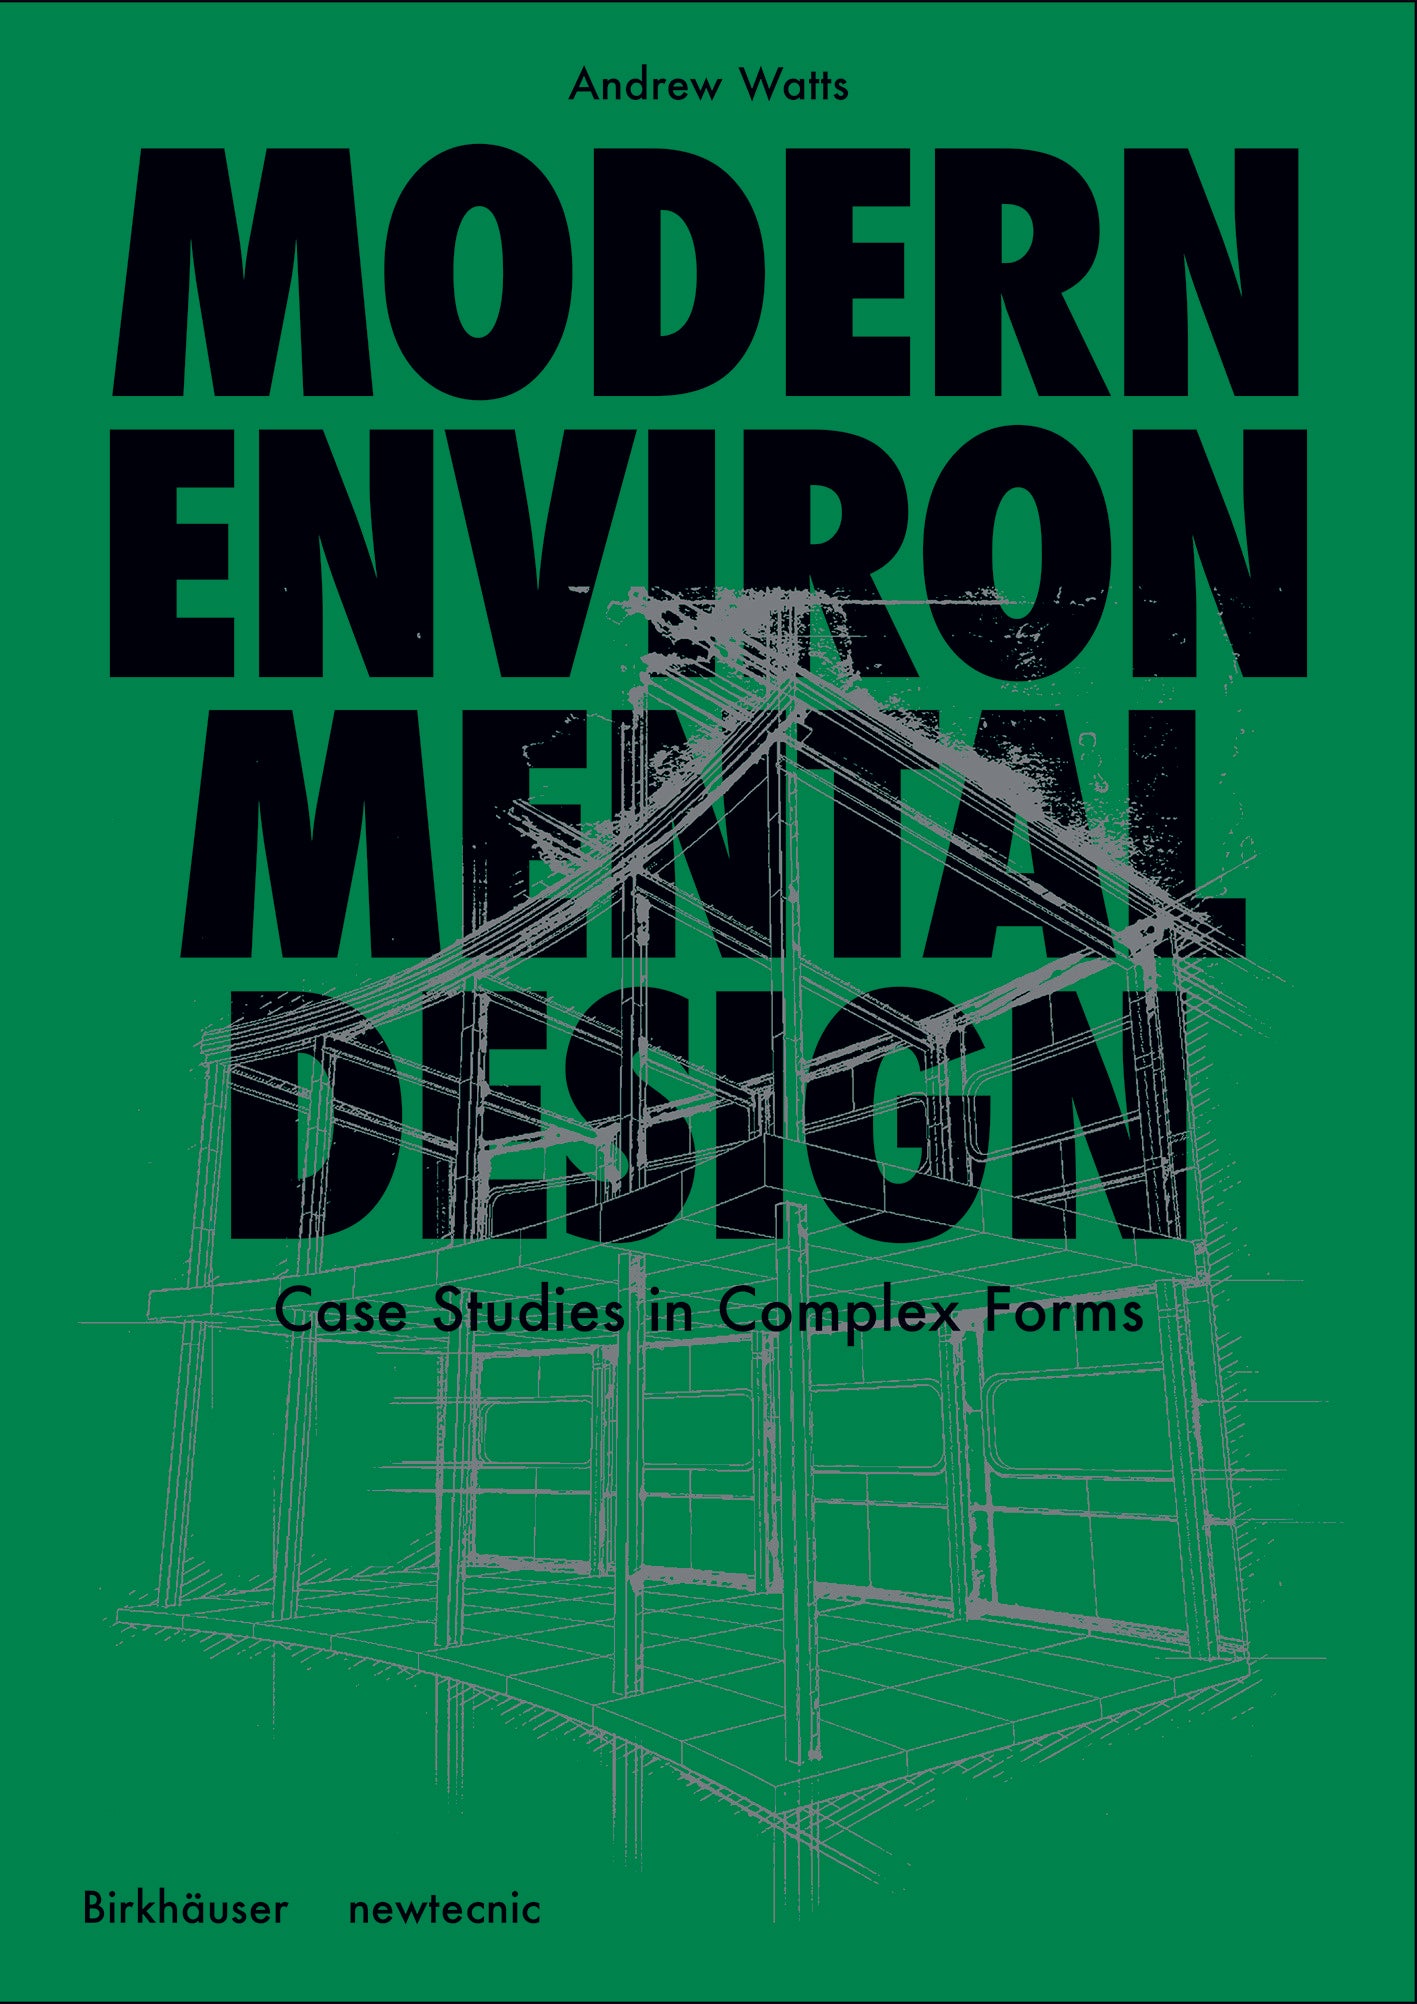 Modern Environmental Design (PB edition) cover